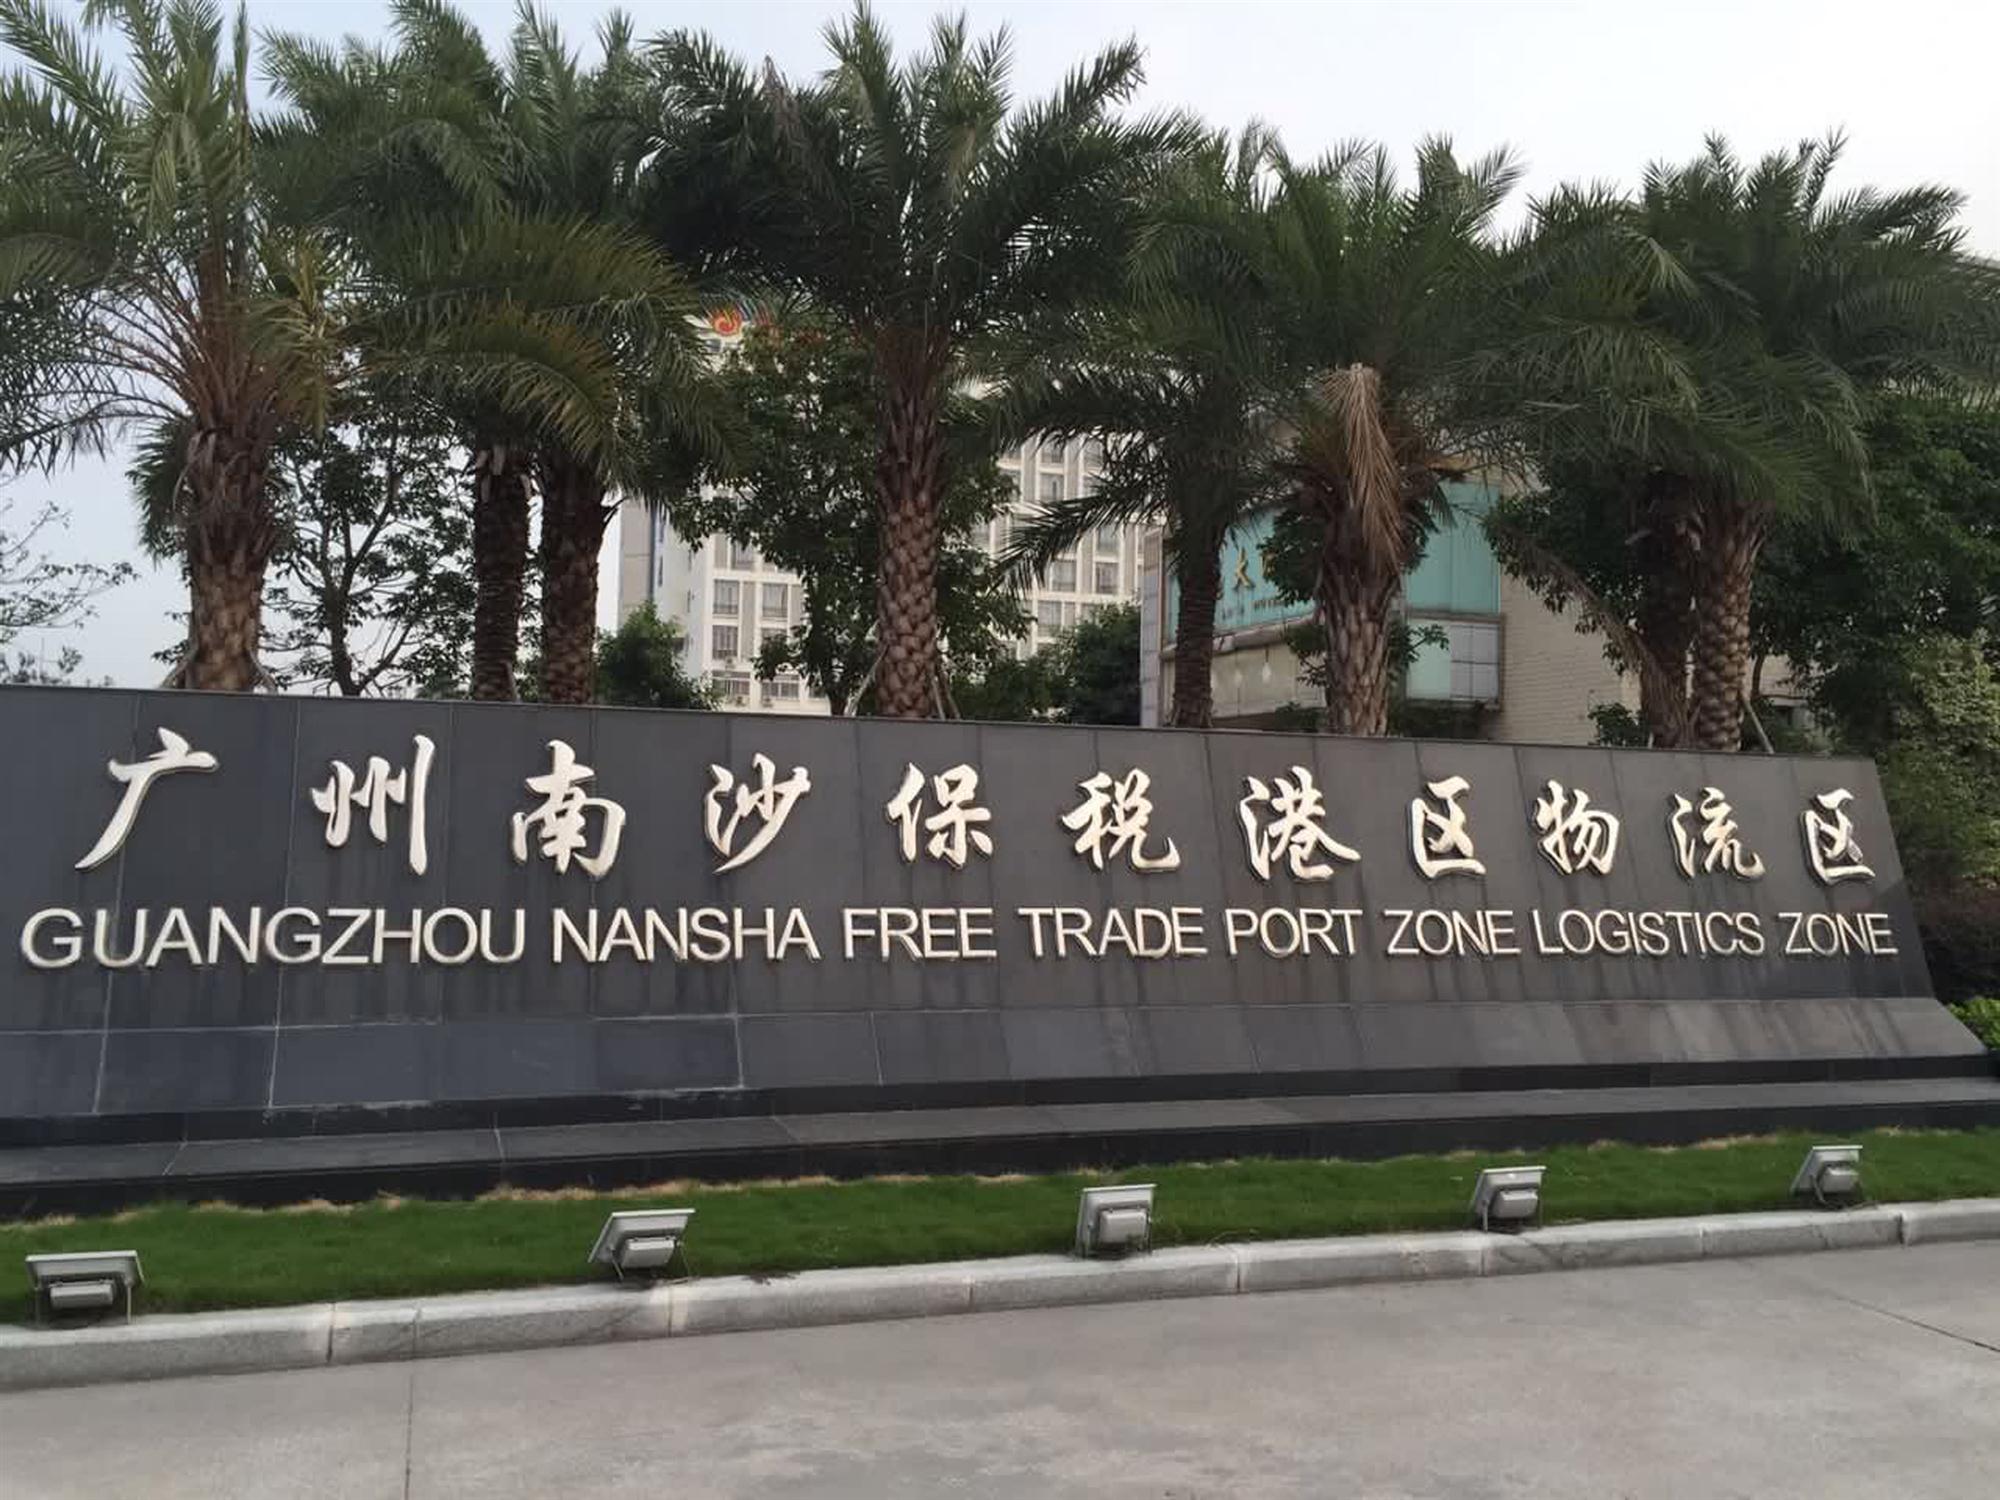 Self Photos / Files - Nansha Free Trade Port Zone Logistics Zone